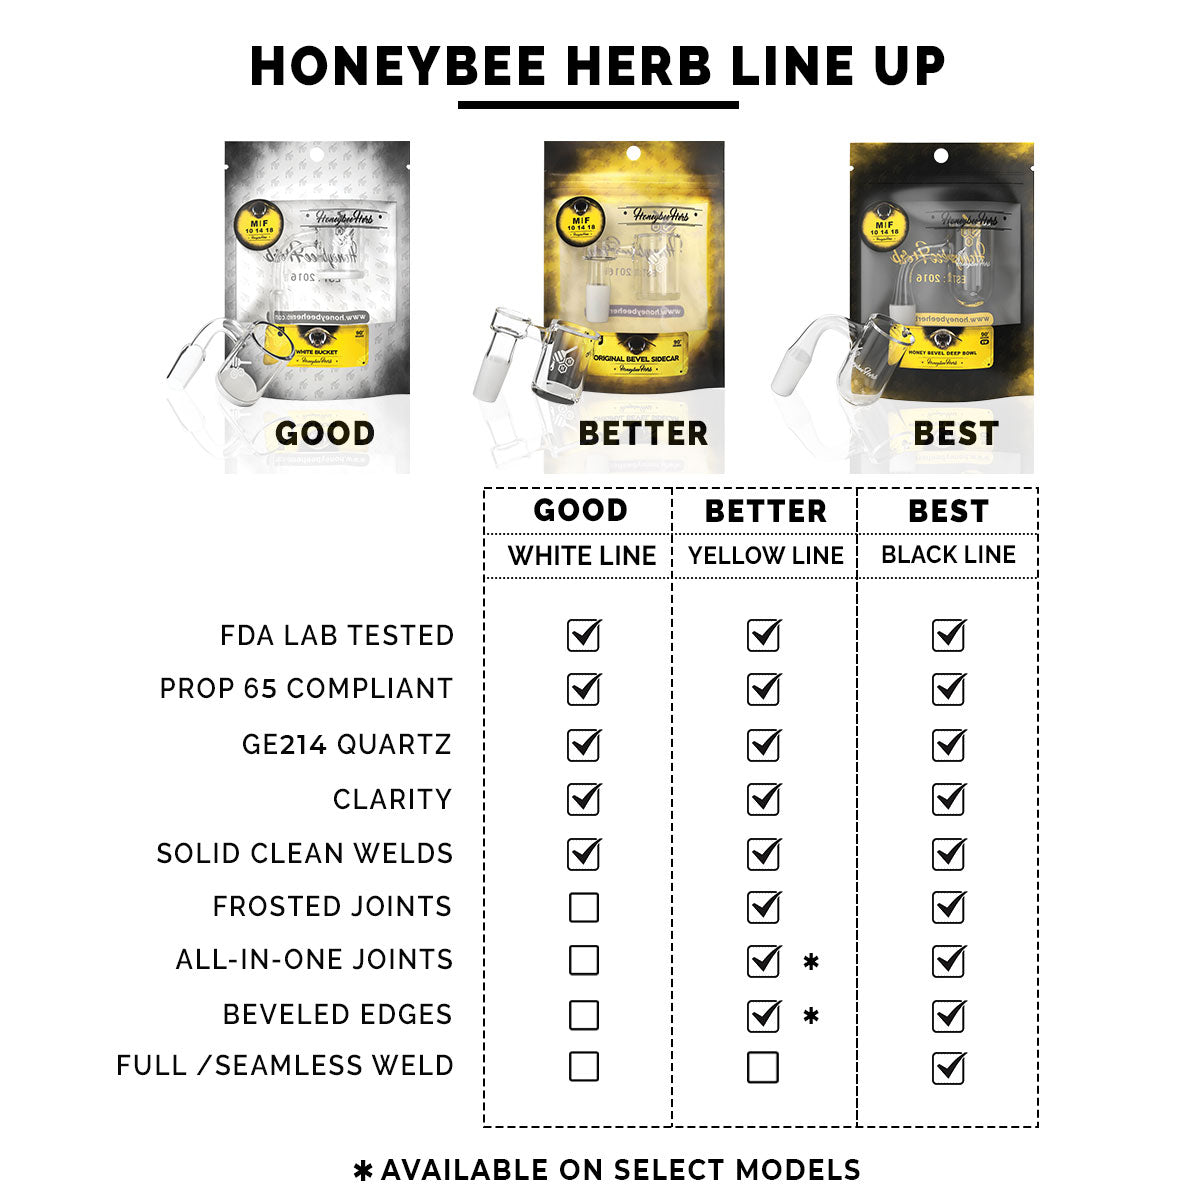 Honeybee Herb quartz banger comparison chart showing features for various quality lines